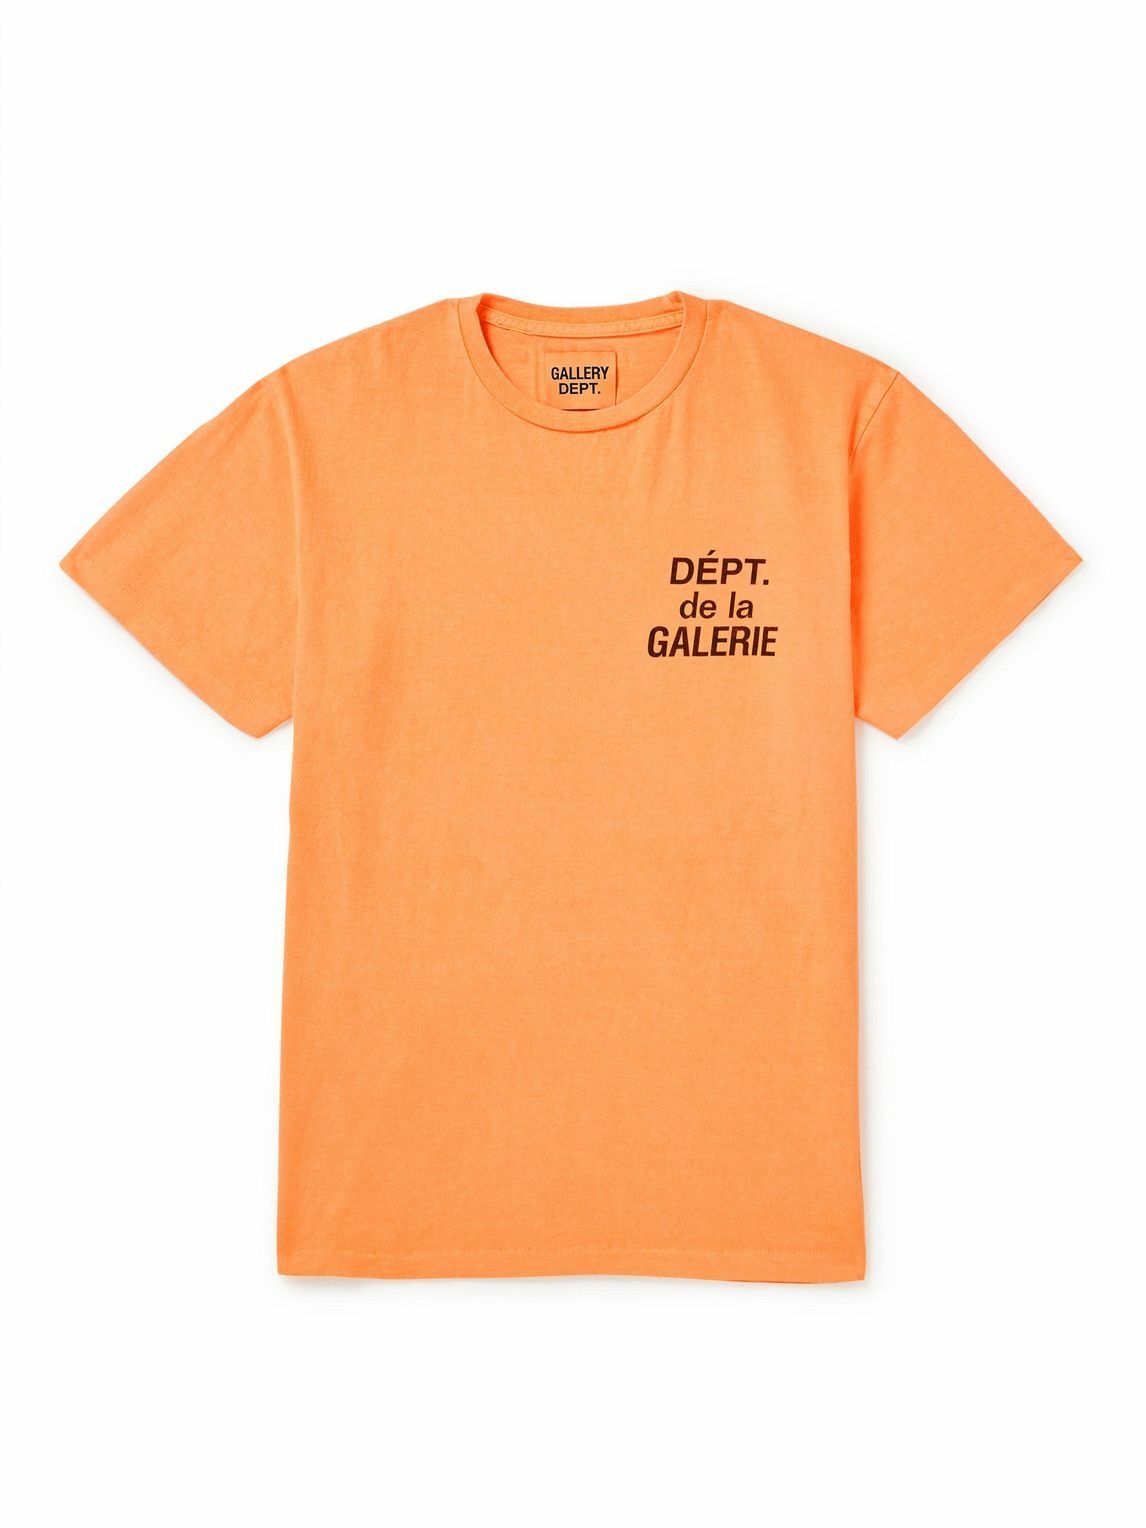 Gallery Dept. - Logo-Print Cotton-Jersey T-Shirt - Orange Gallery Dept.